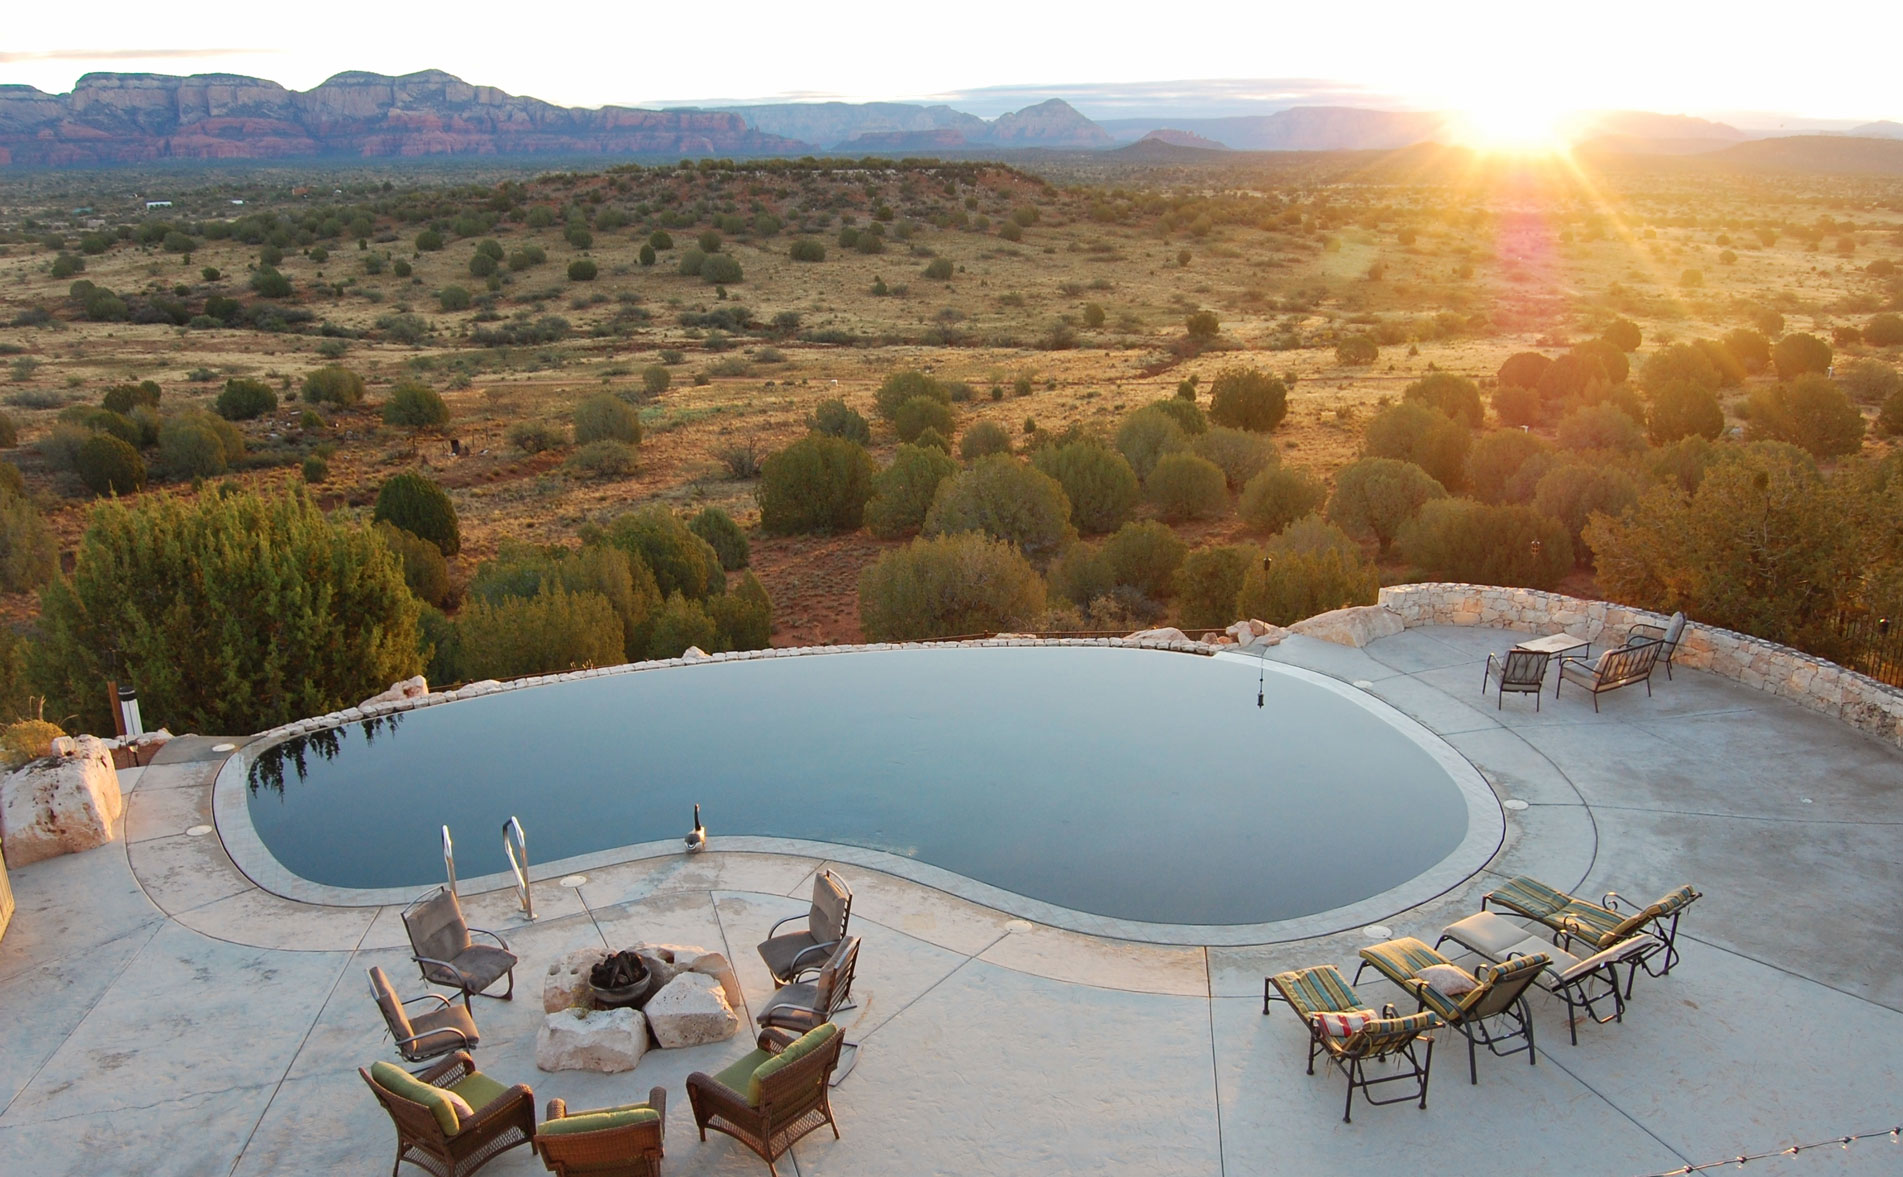 image of reflective pool in a desert landscape